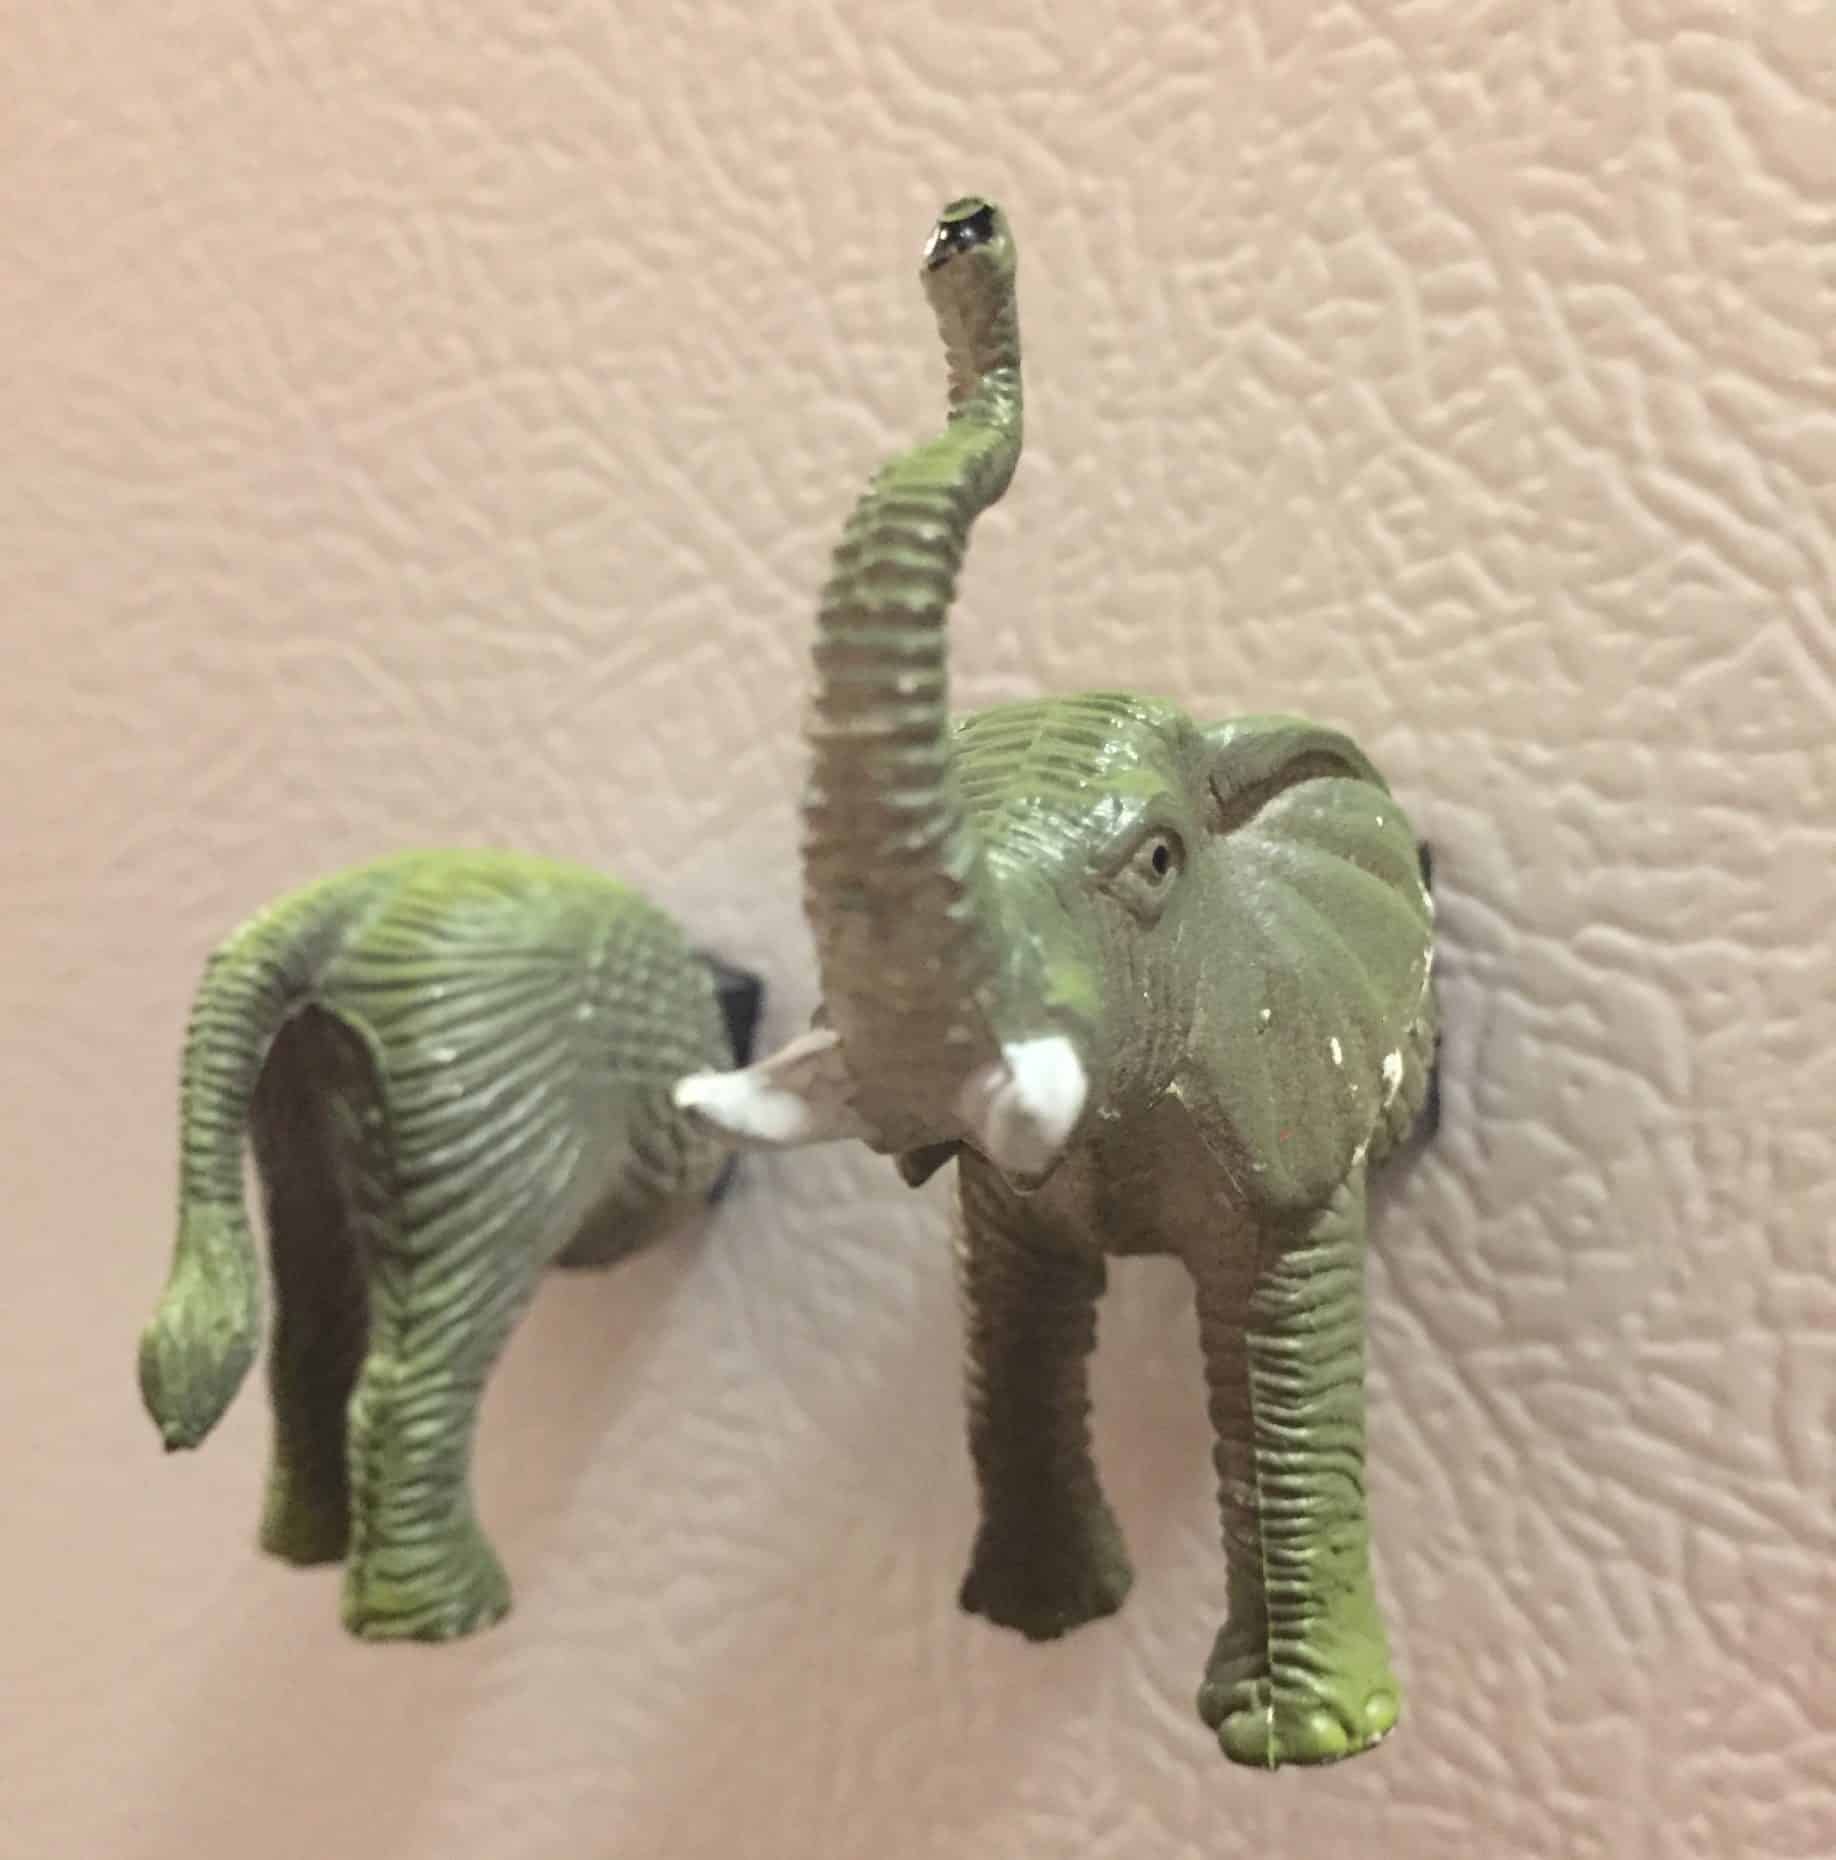 Elephant refrigerator magnets